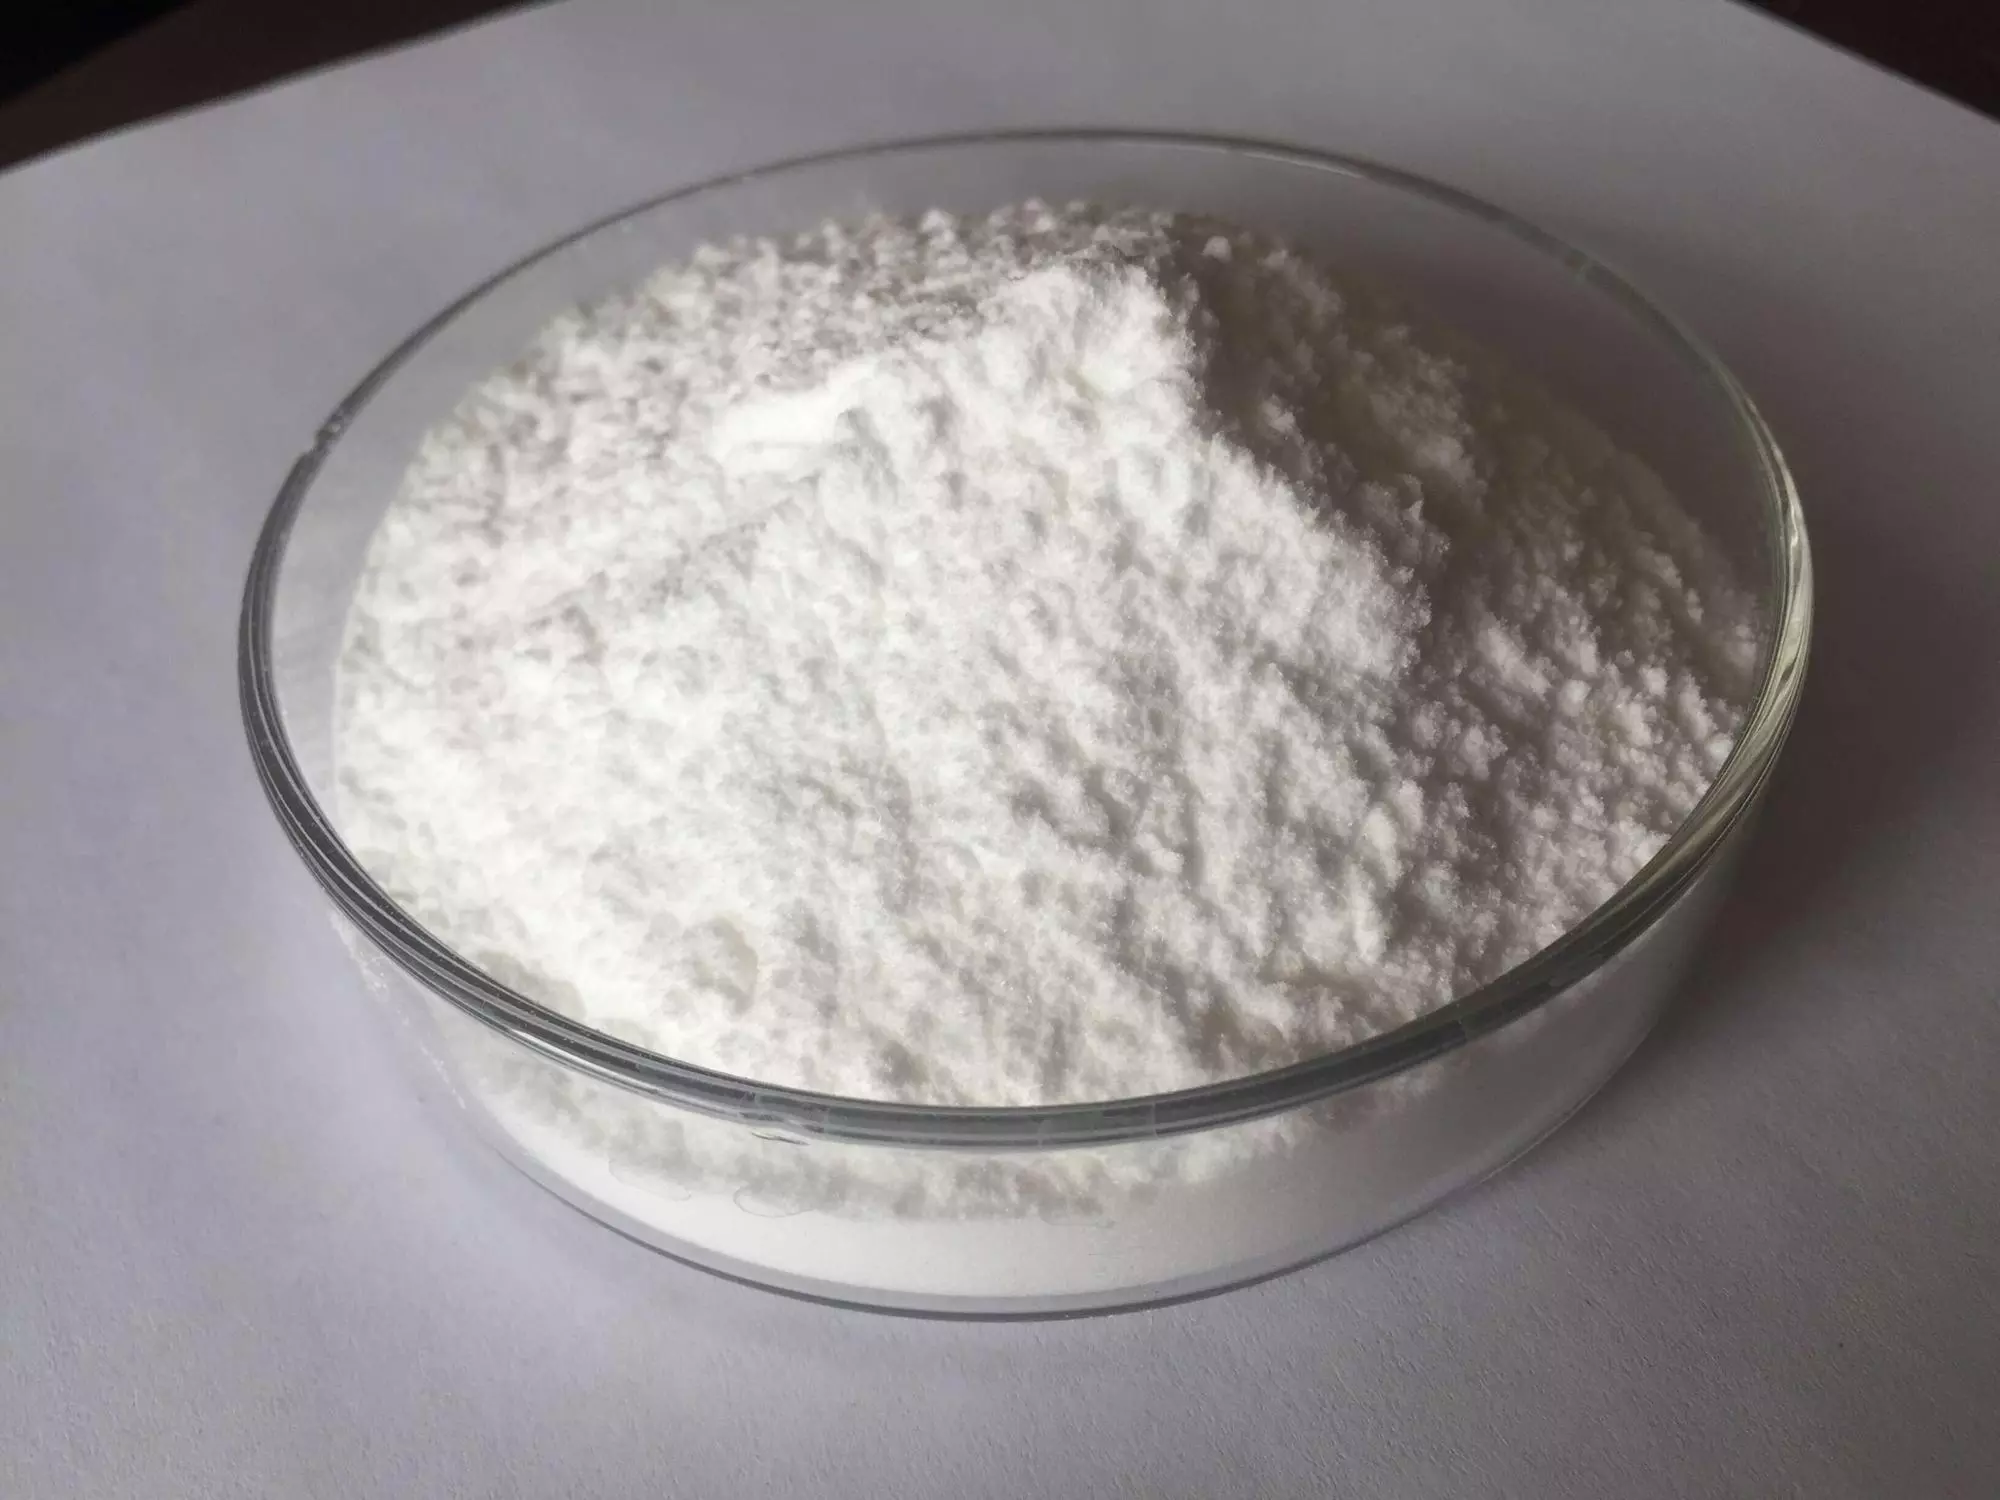 Sodium lactate solution, reagent grade, 250 mL - Catapower Inc.